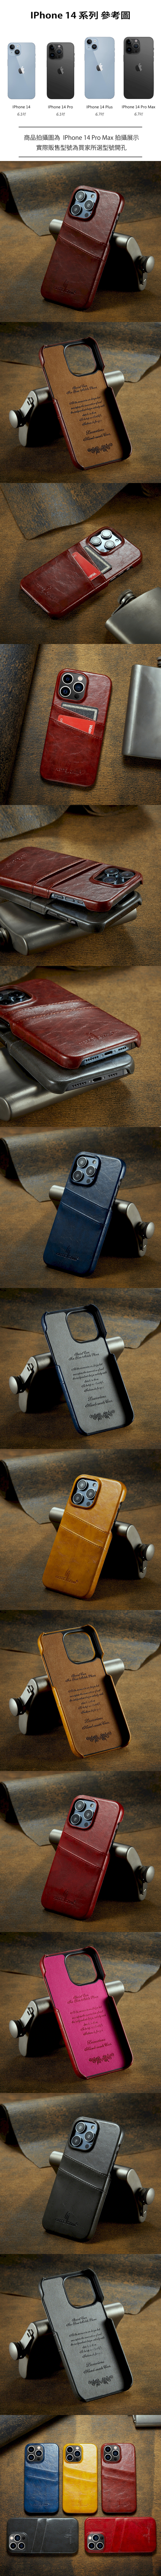 IPhone 13 Pro Max 13 mini i13 5.4/6.1/6.7 皮革保護殼(PLAIN) - 牛皮仿真皮雙插卡手機殼背蓋